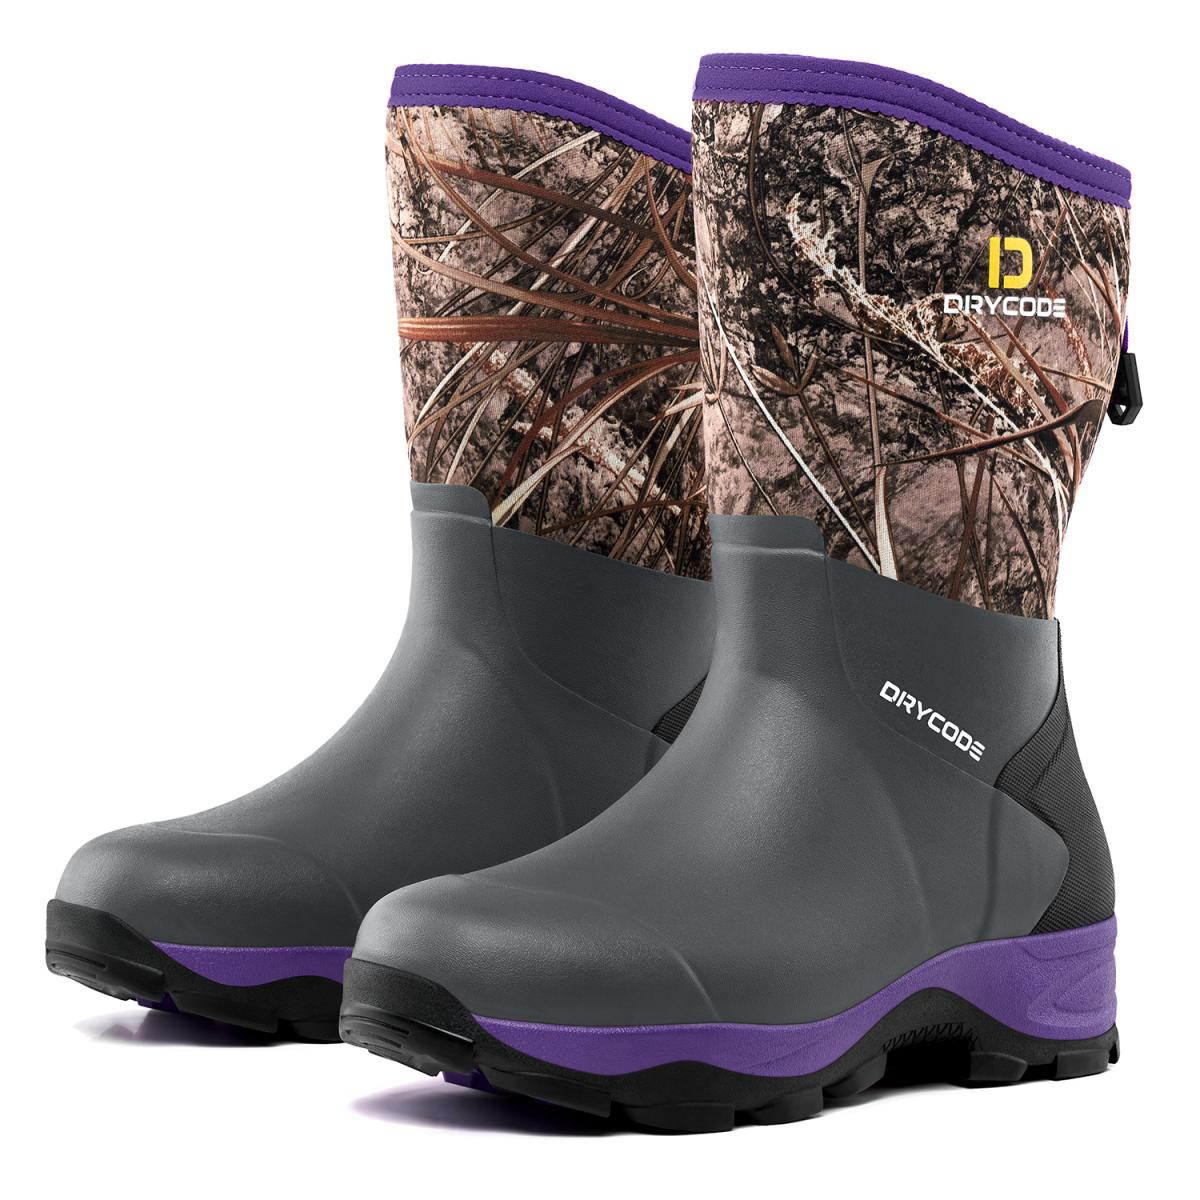 Waterproof Rain boots, Snow Boots for Women & Men